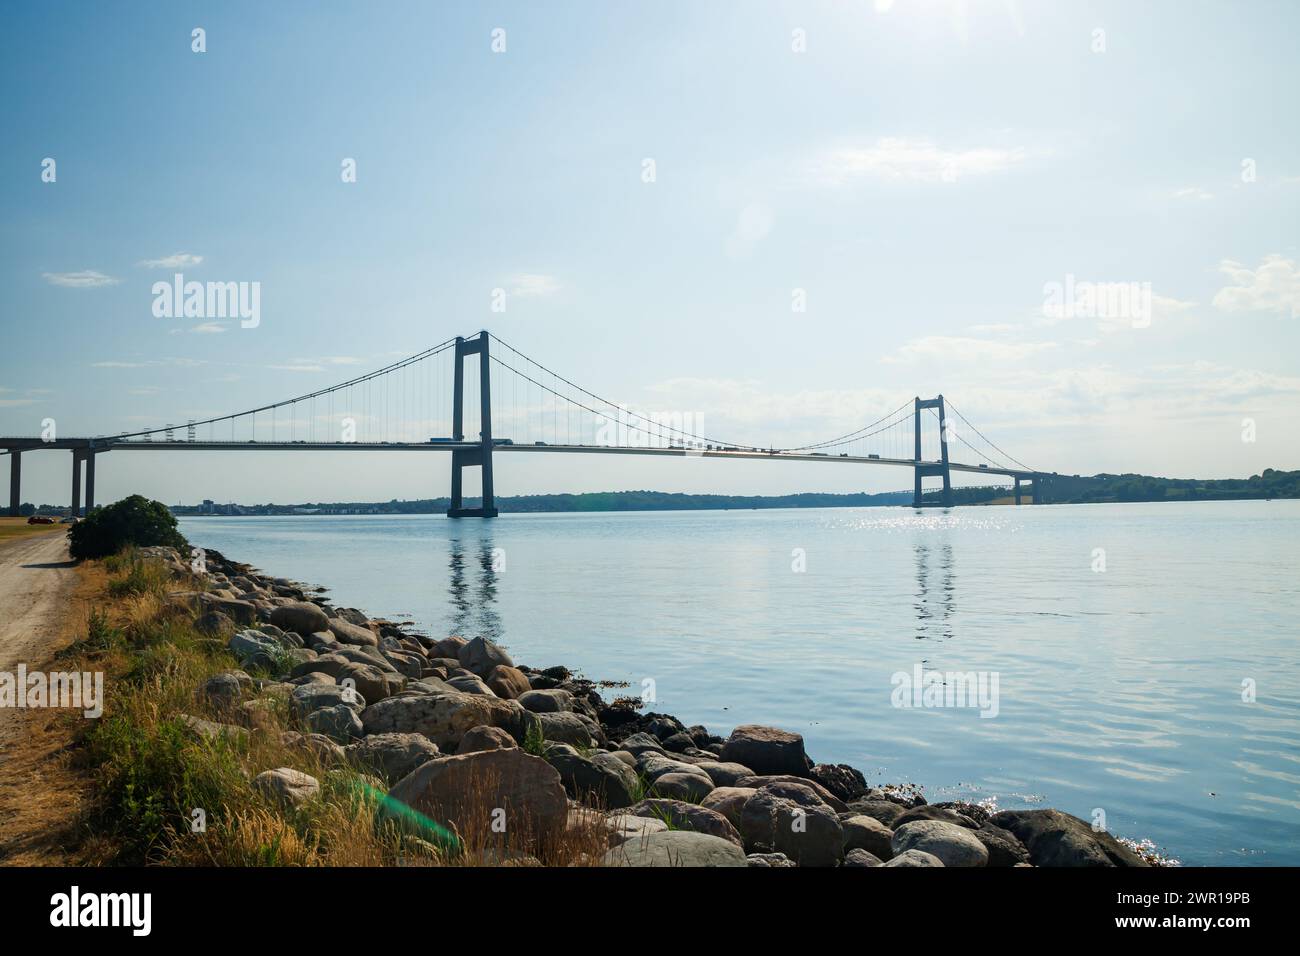 The New Little Belt bridge in Denmark Stock Photo